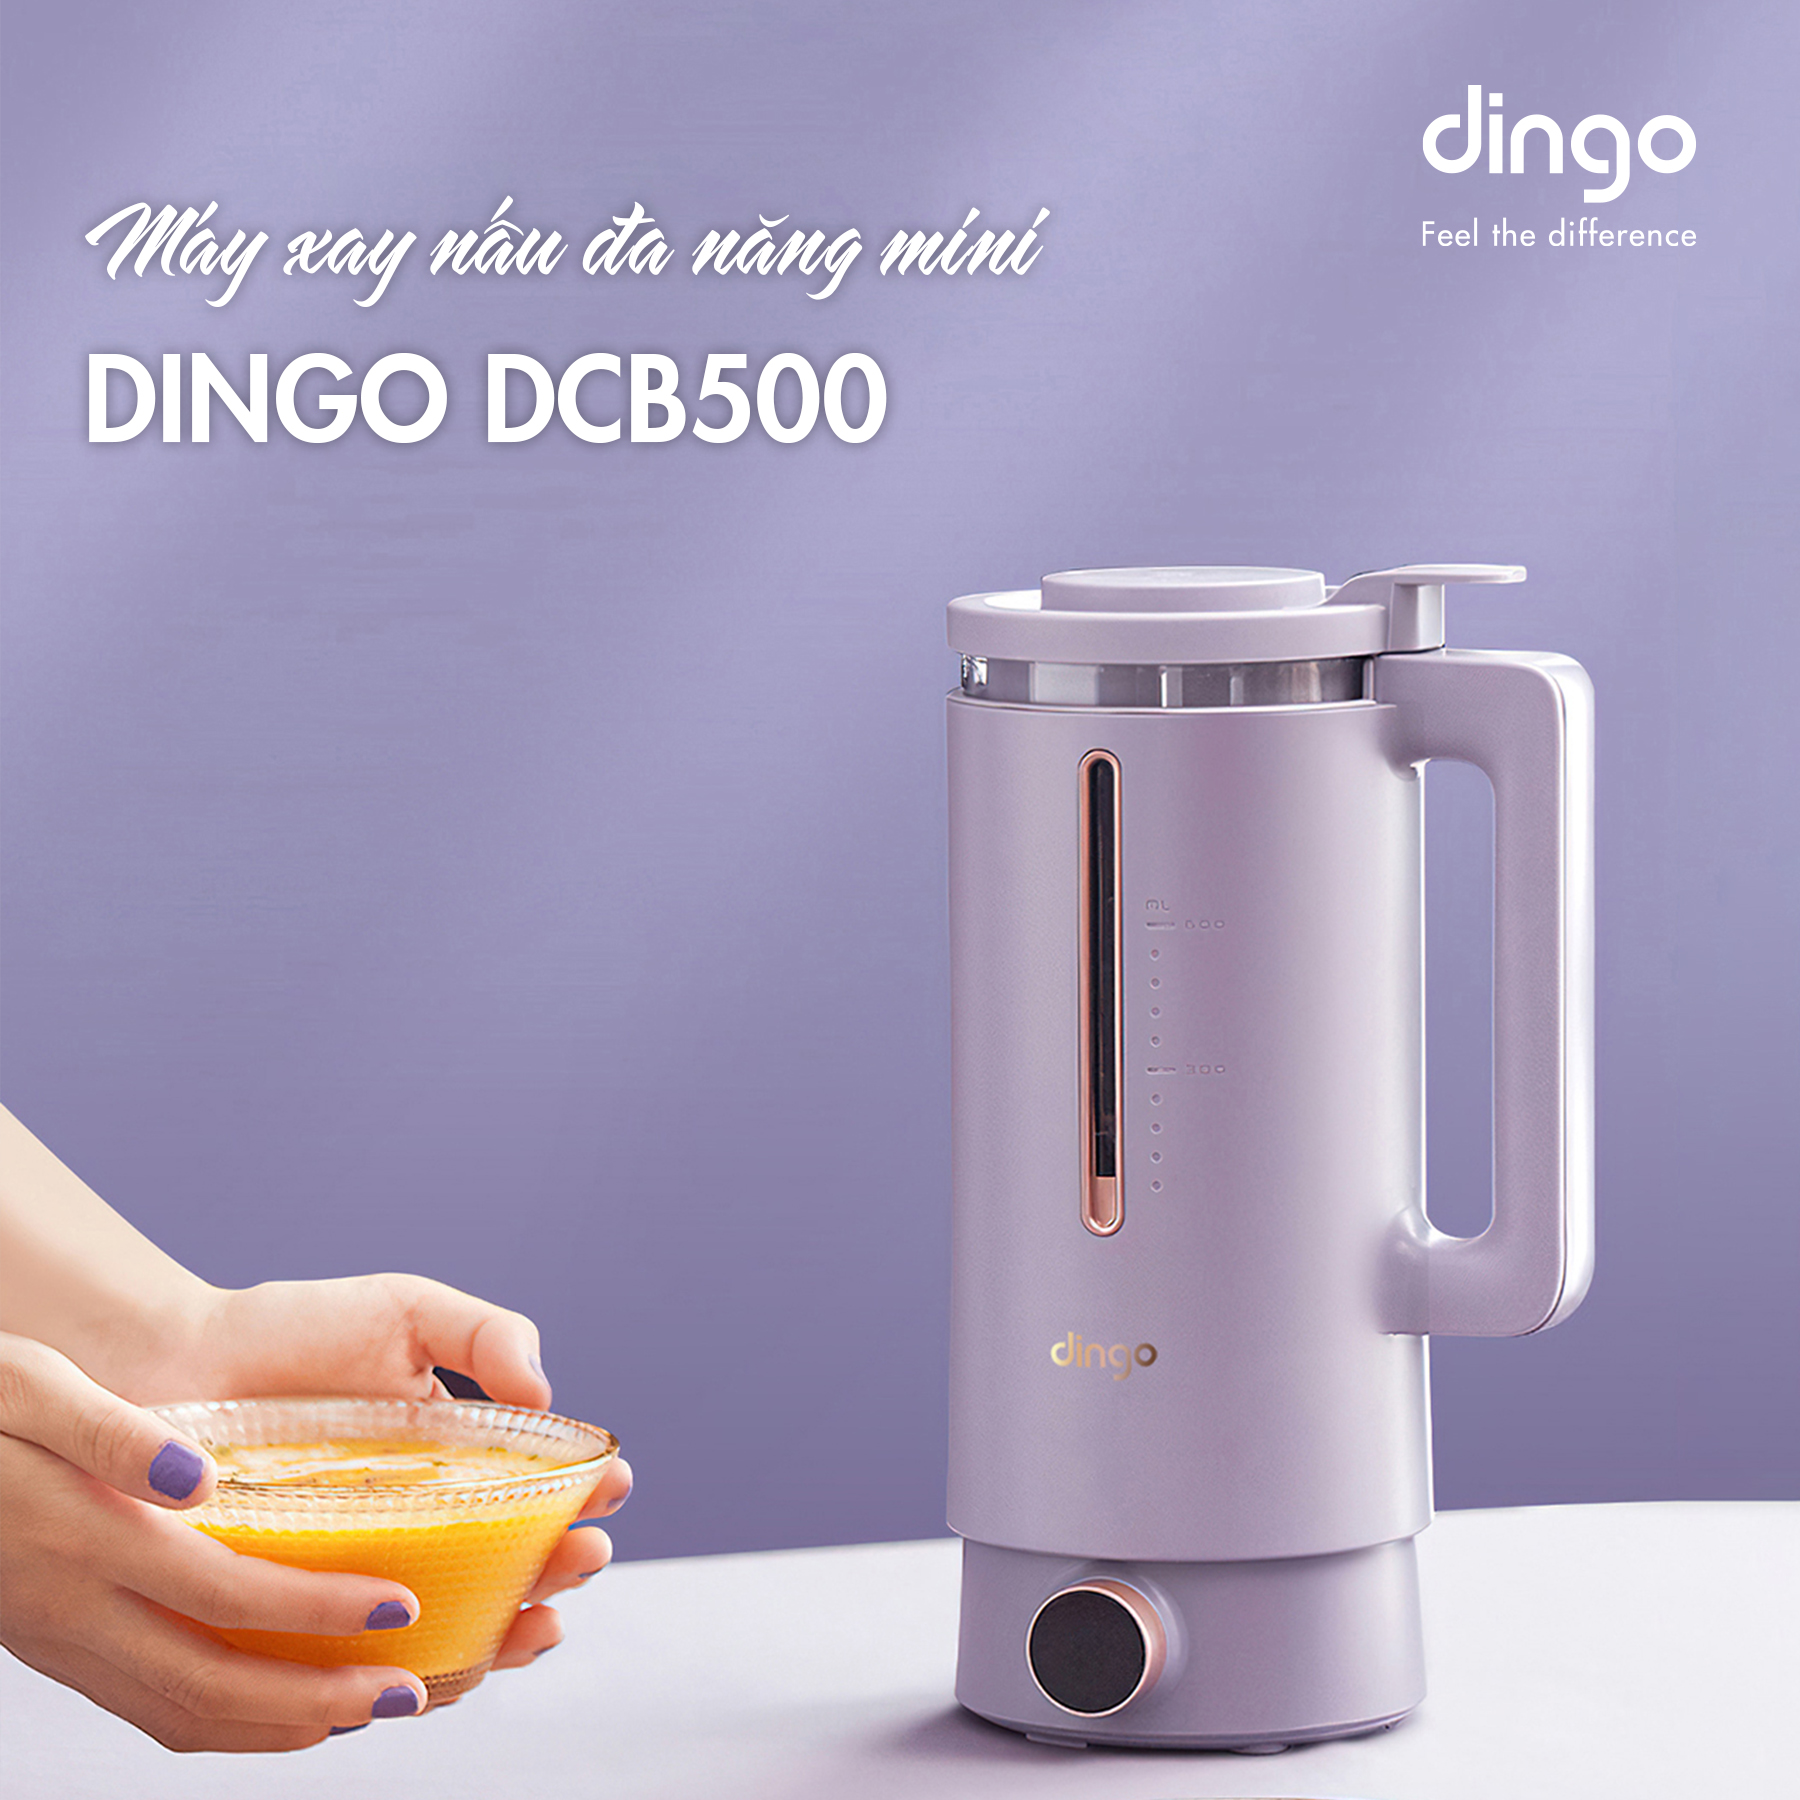 Máy xay nấu đa năng mini DINGO DCB500.